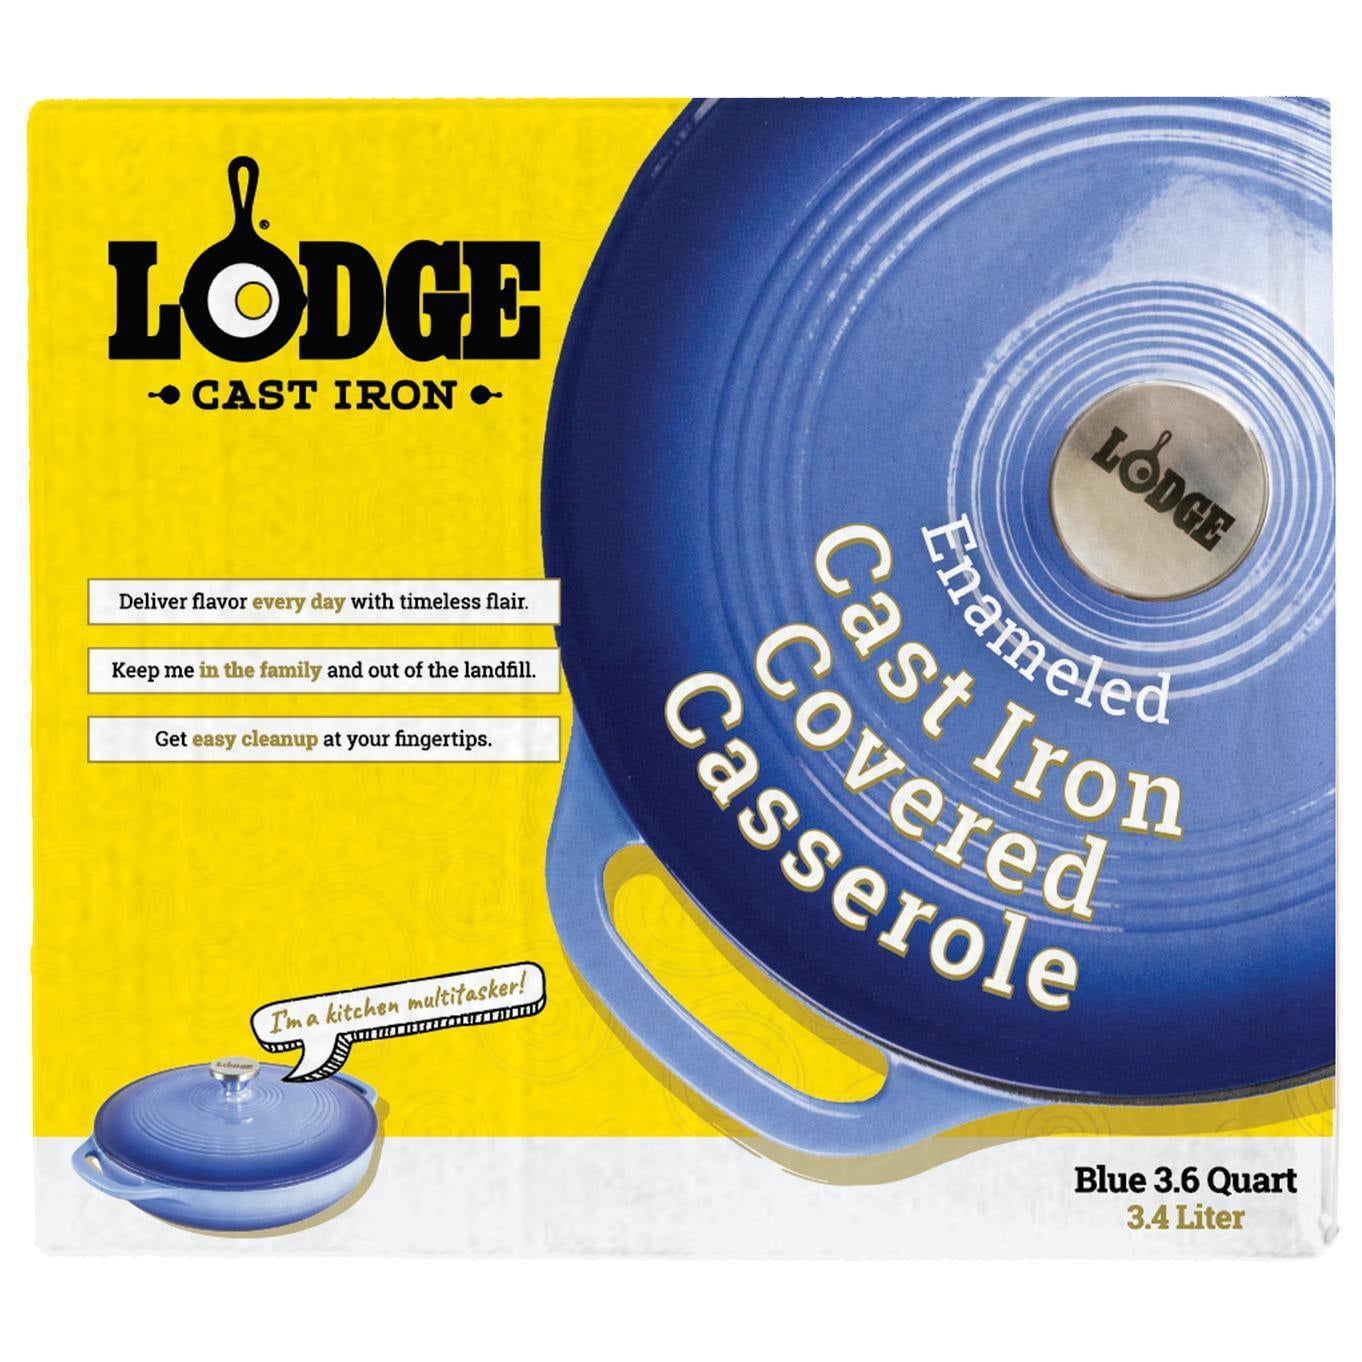 Lodge Cast Iron 3.6 Quart Enameled Cast Iron Casserole in Blue